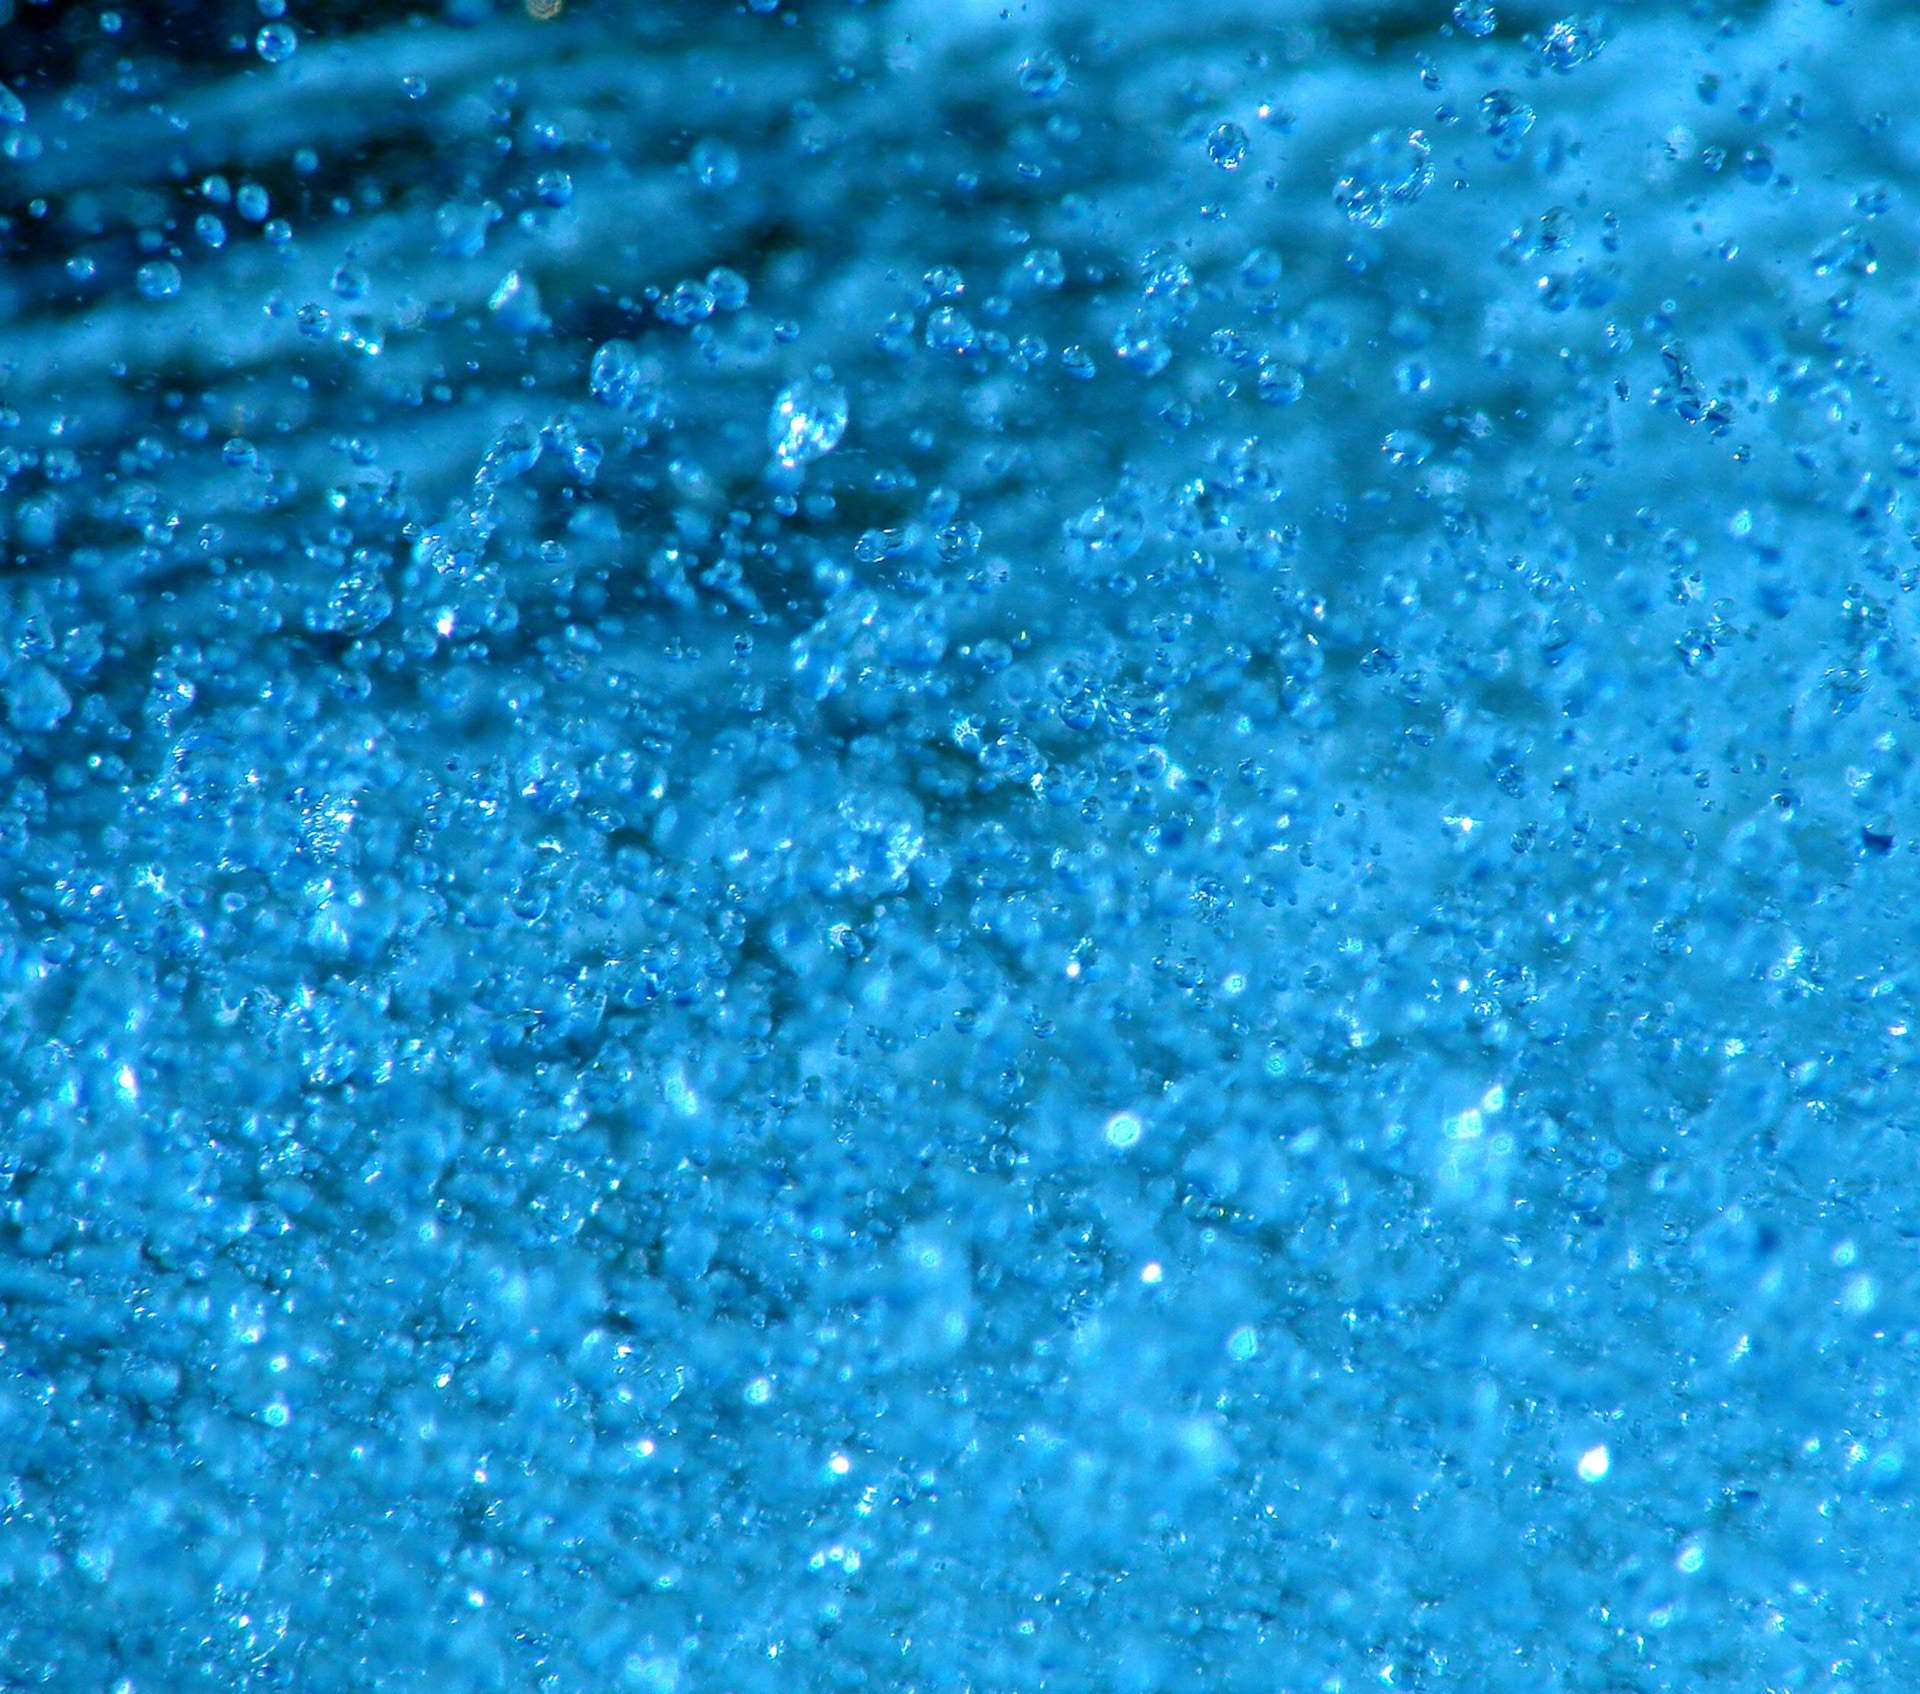 Wet, Water, Cool, Splash, Droplets, blue, full frame